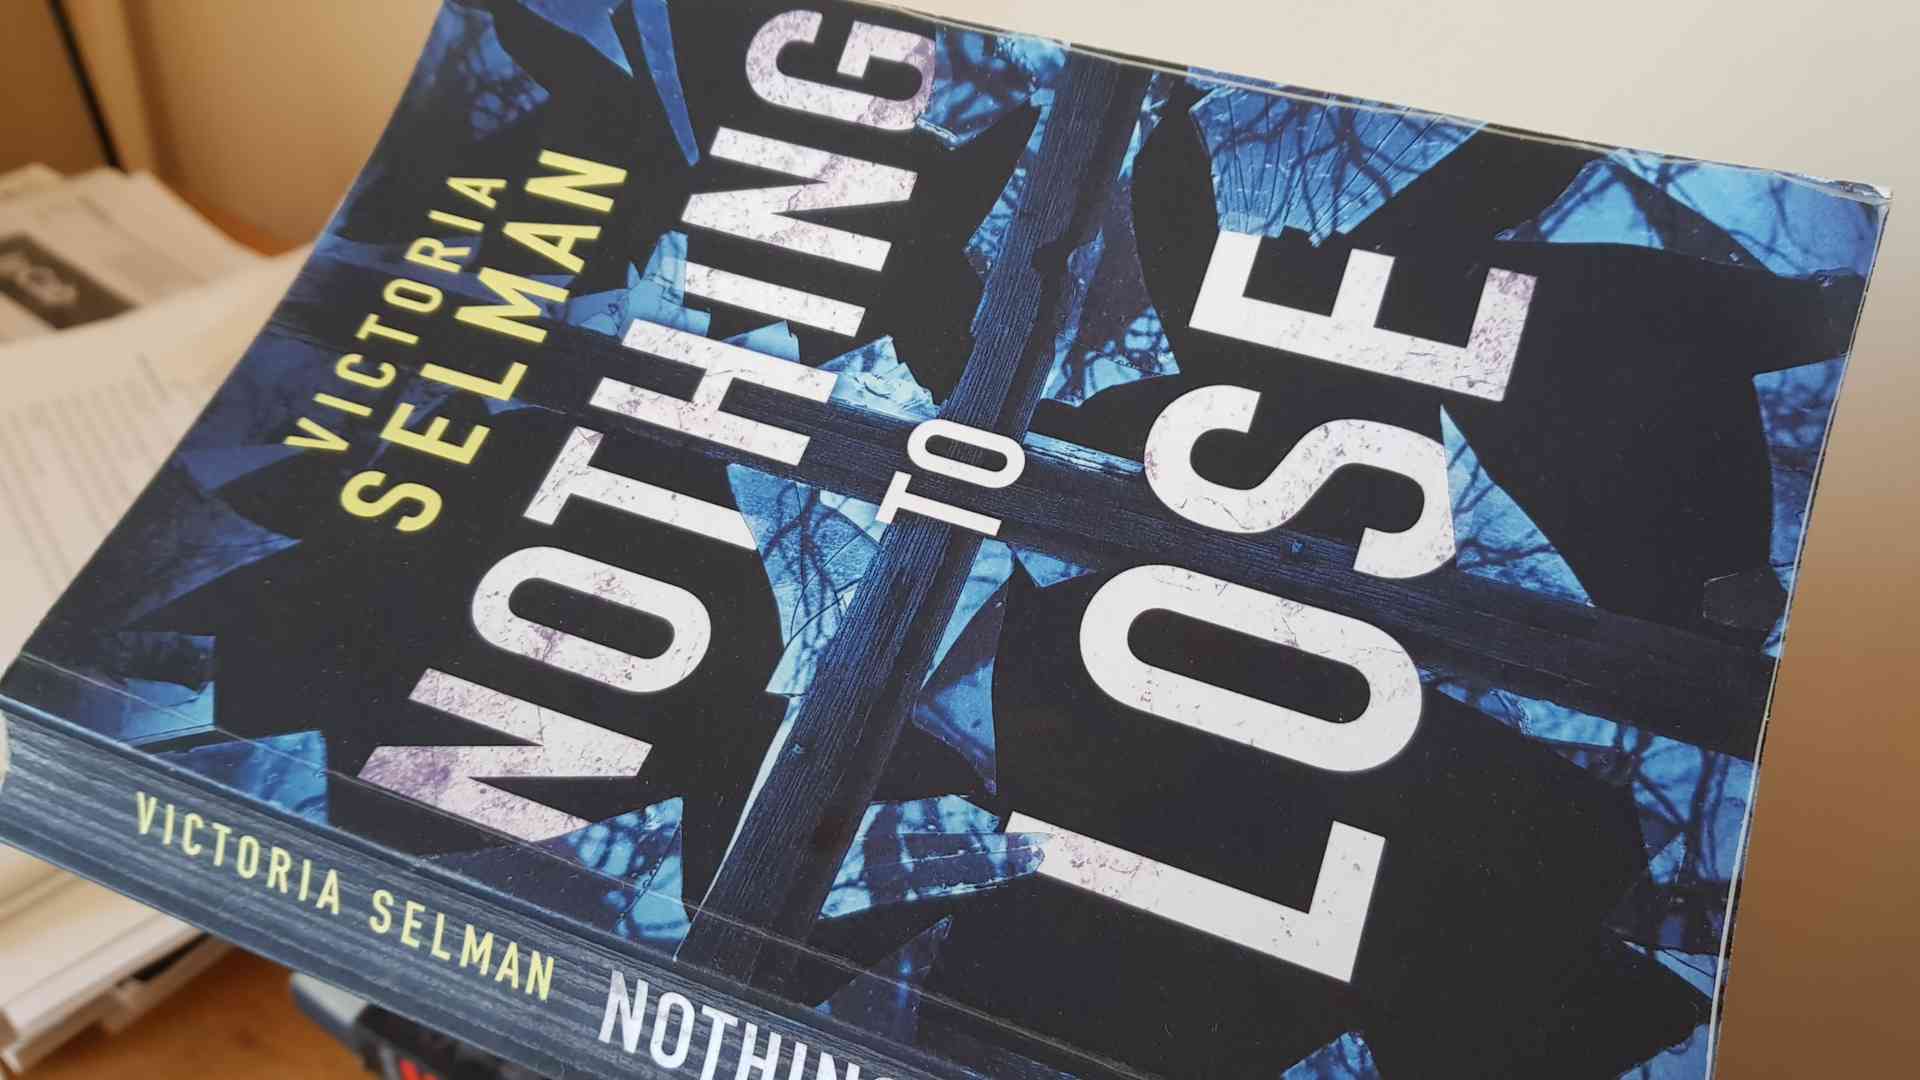 Nothing to Lose, av Victoria Selman